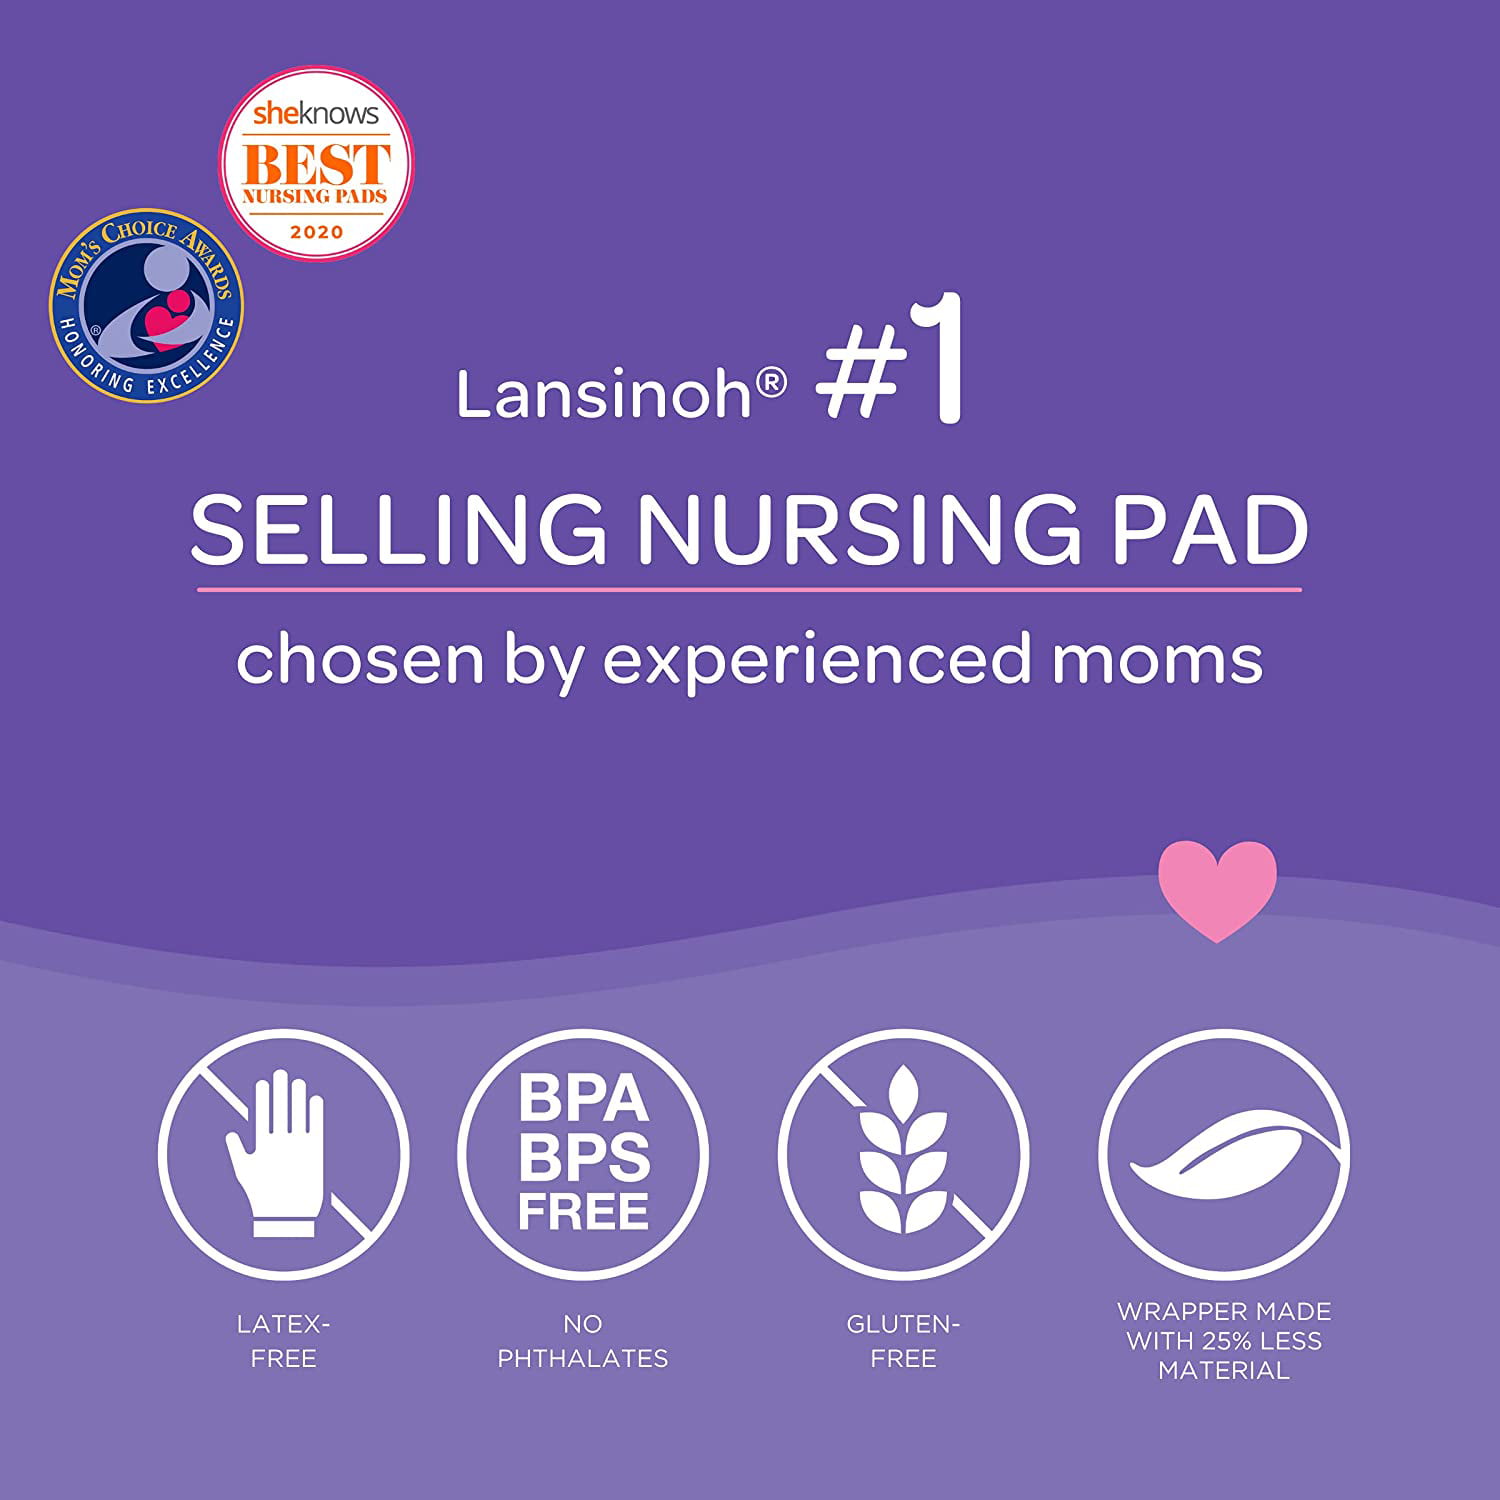 Lansinoh Stay Dry Disposable Nursing Pads x Breastfeeding 200